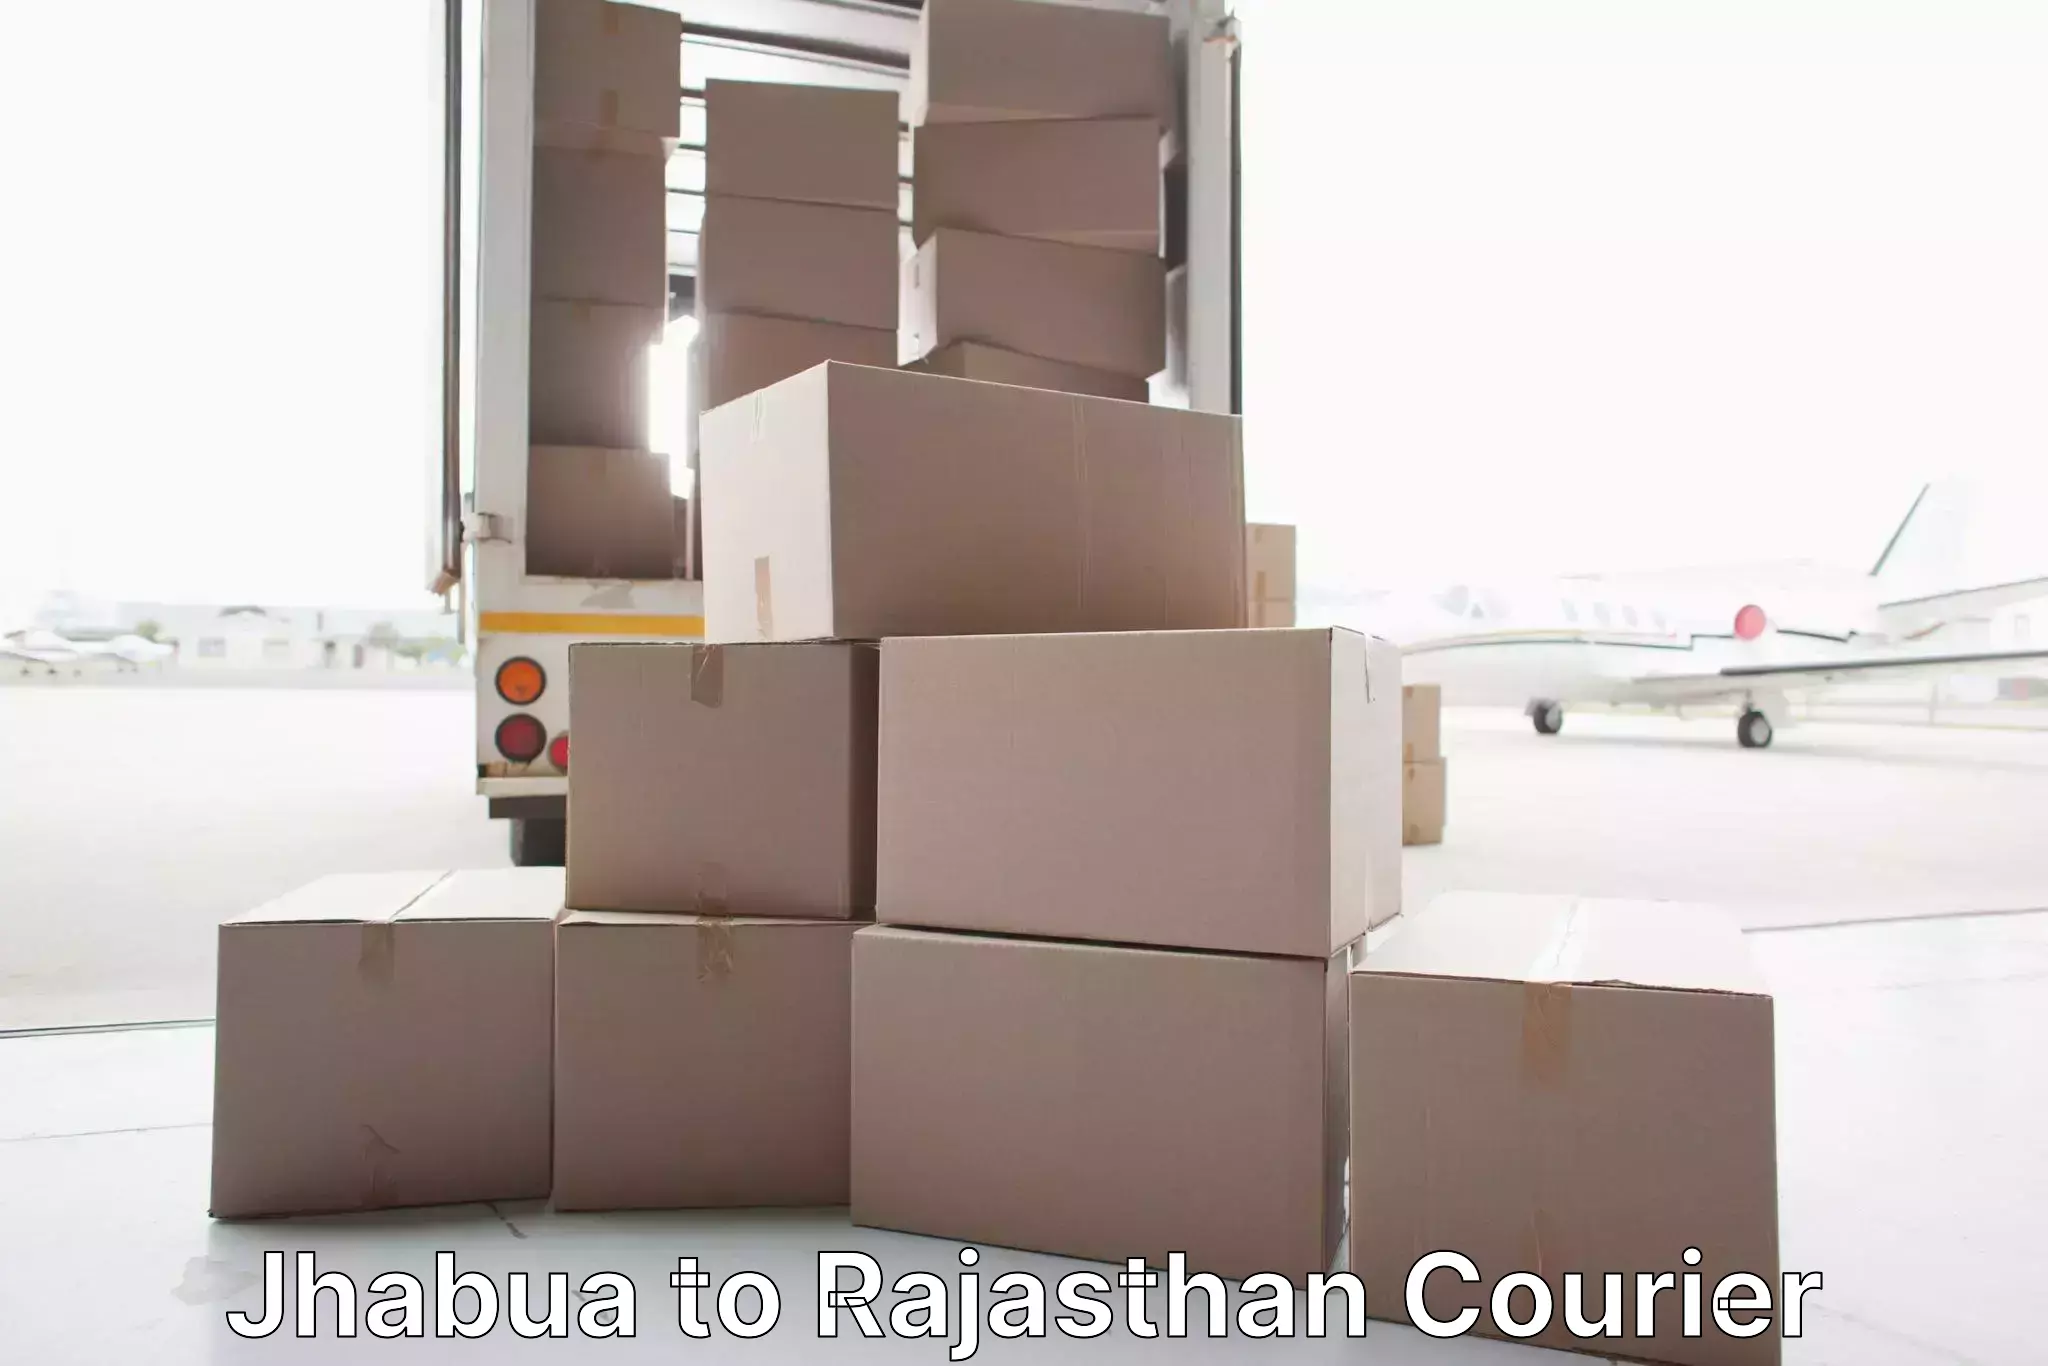 Residential moving experts Jhabua to Jodhpur